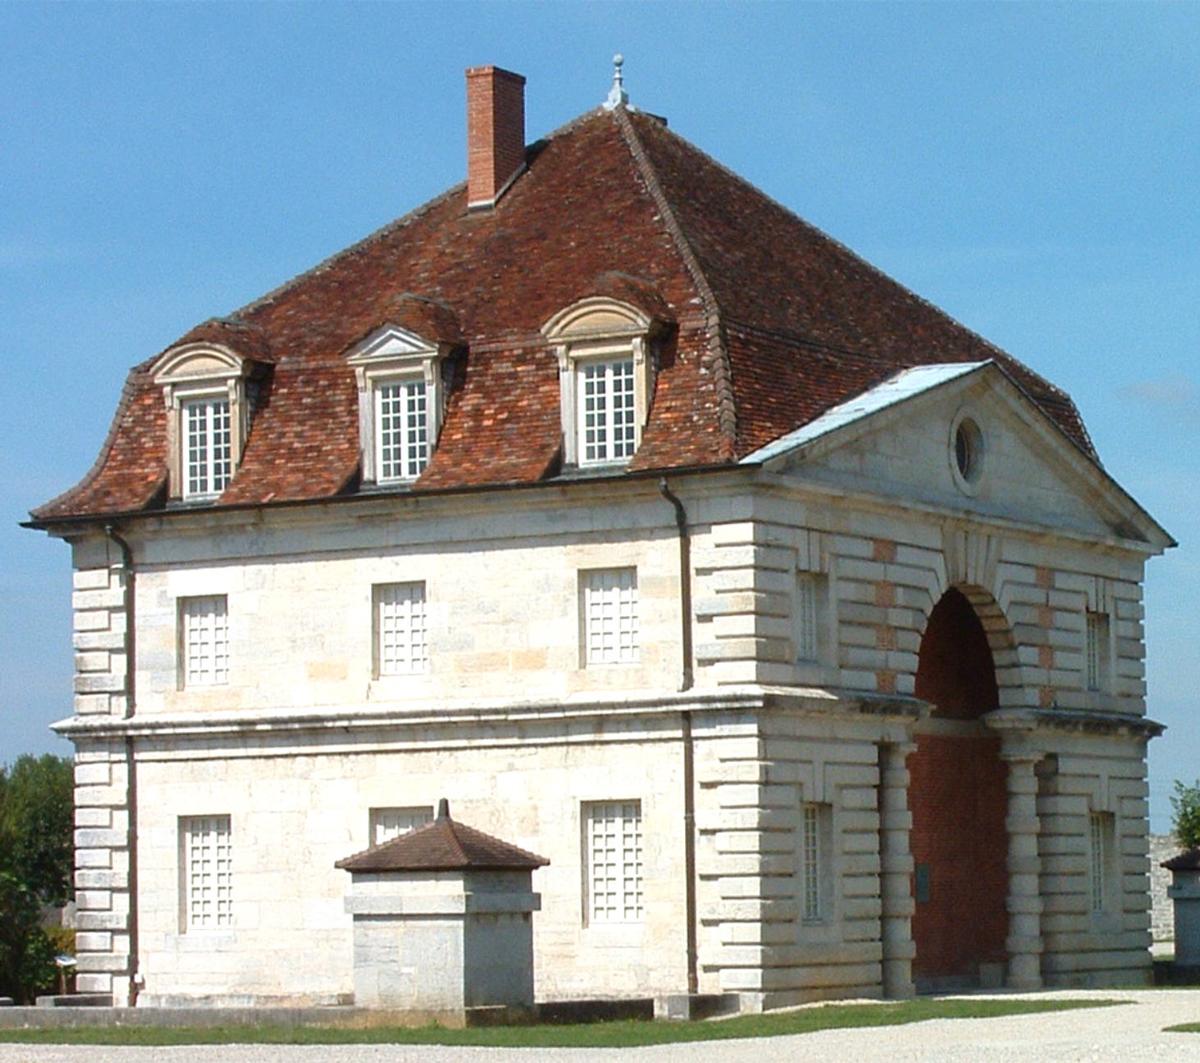 Royal Saline at Arc-et-Senans 